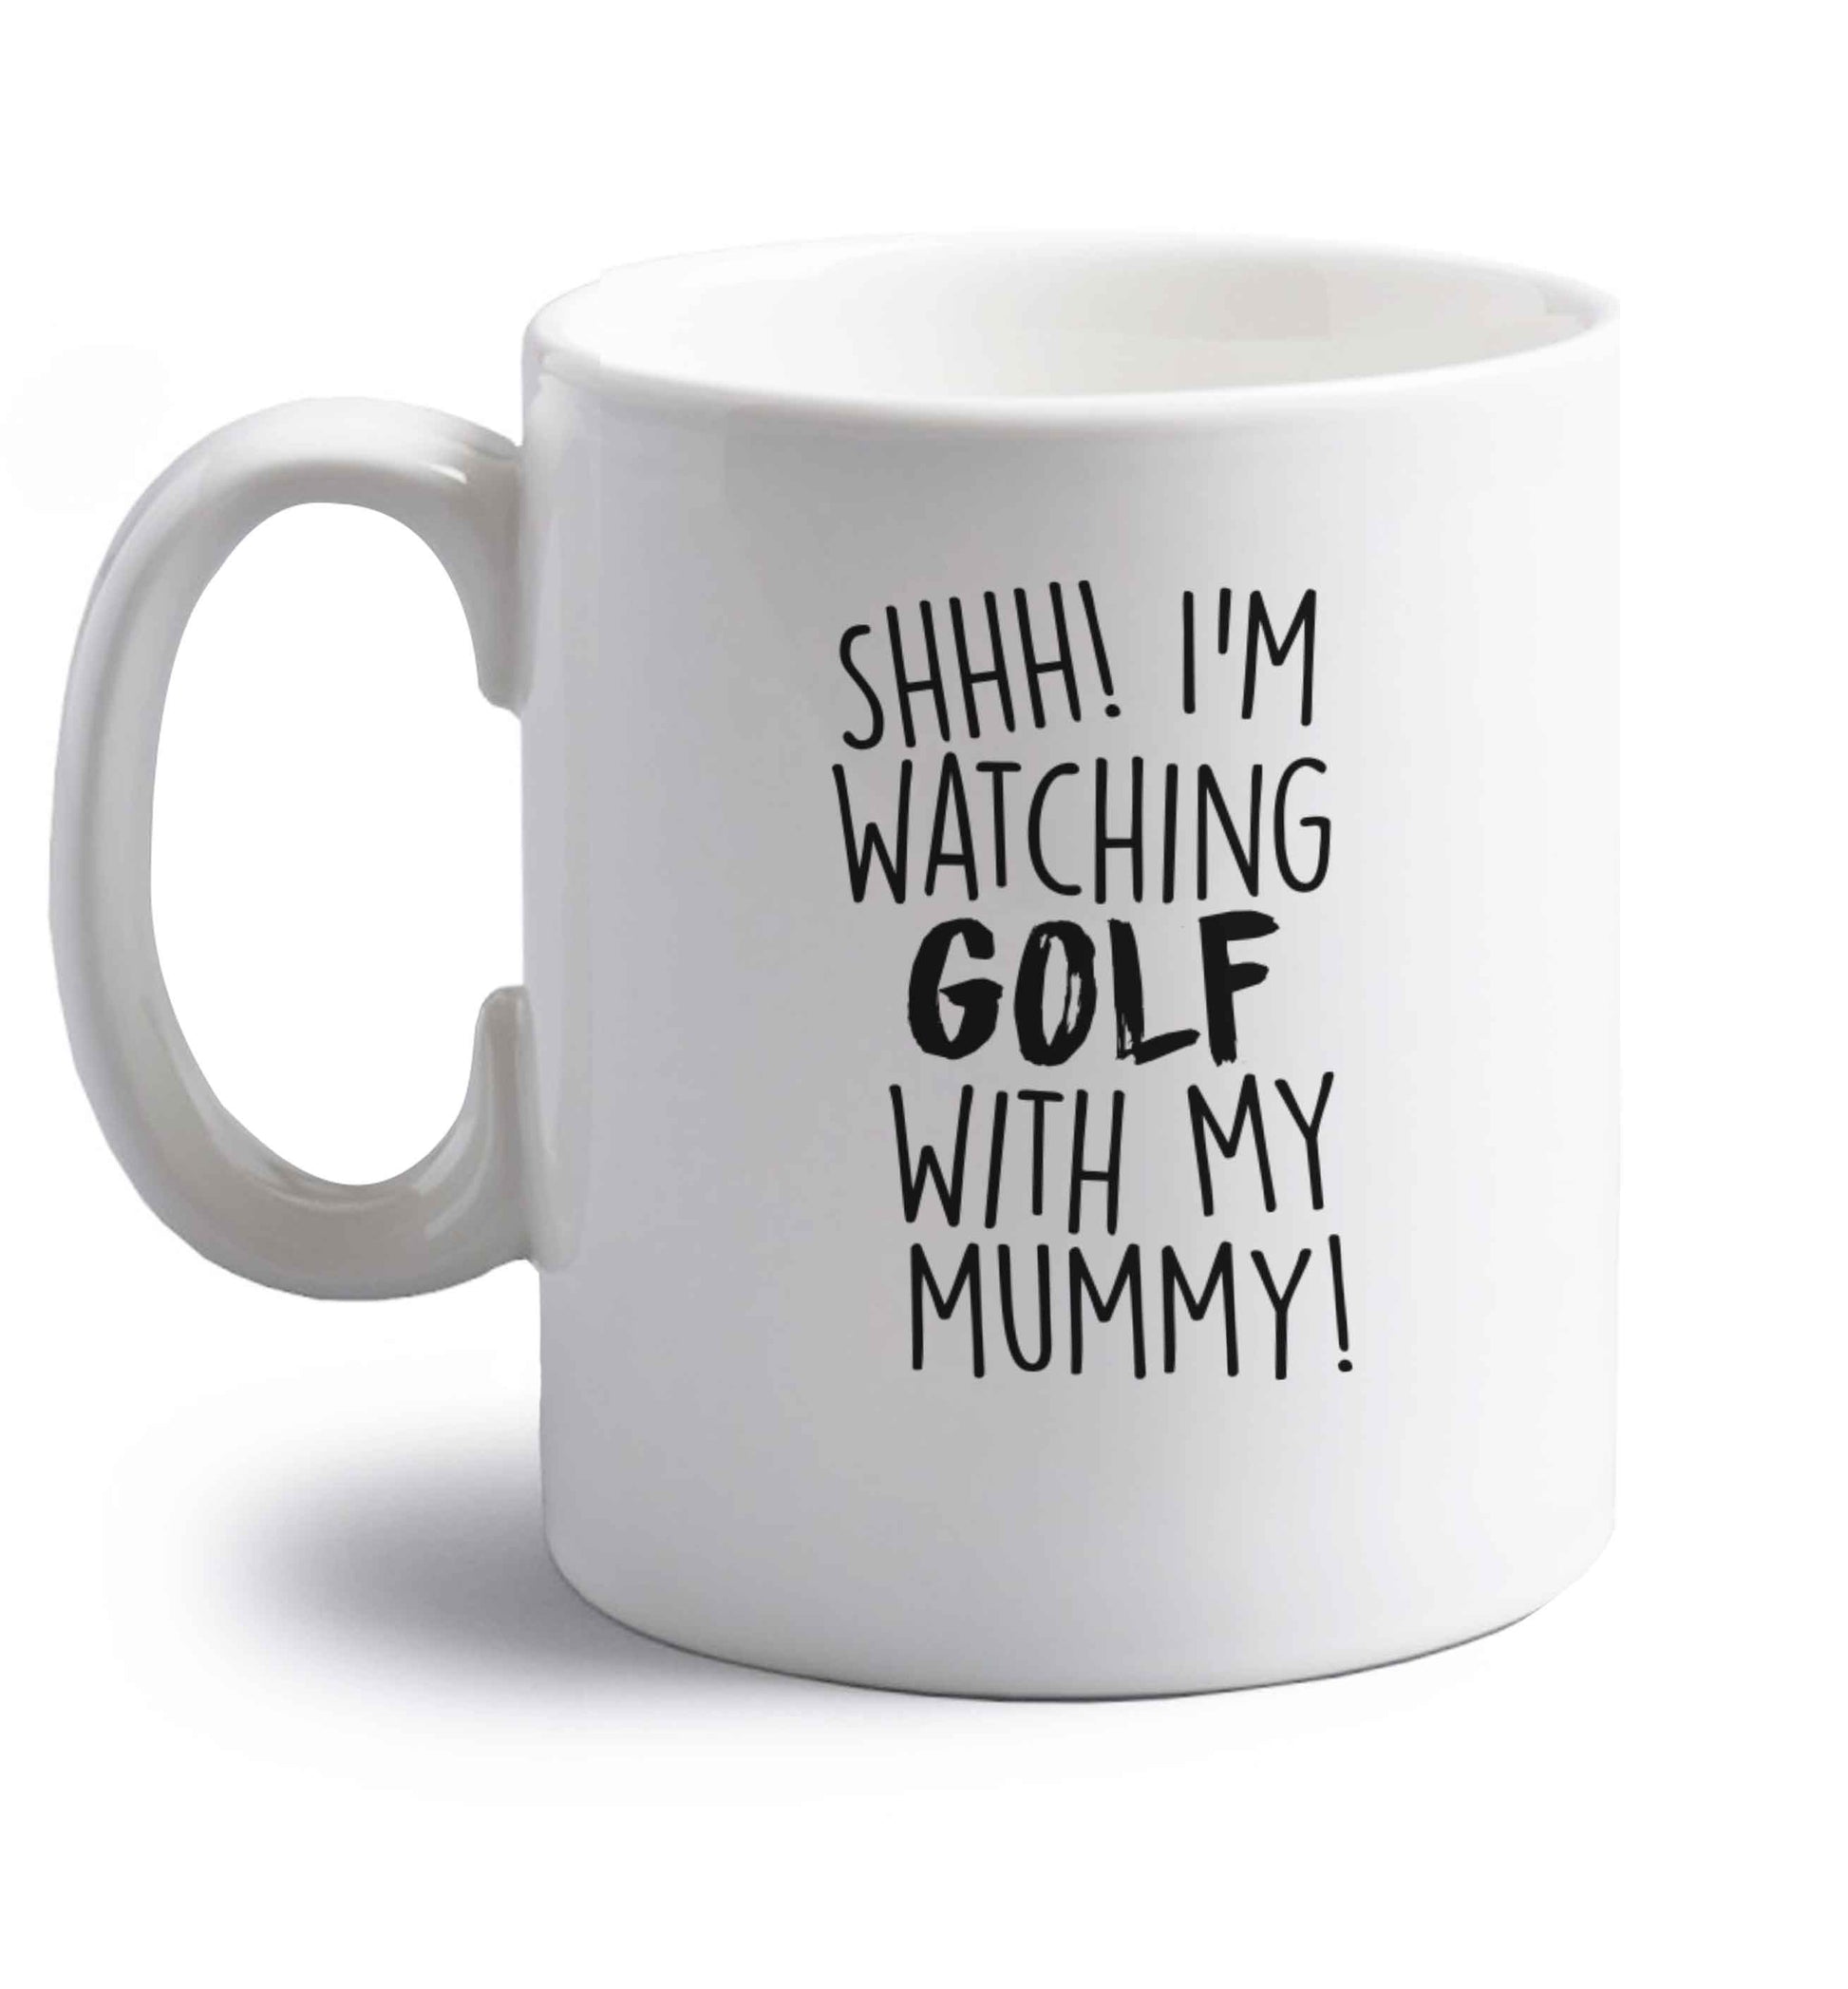 Shh I'm watching golf with my mummy right handed white ceramic mug 